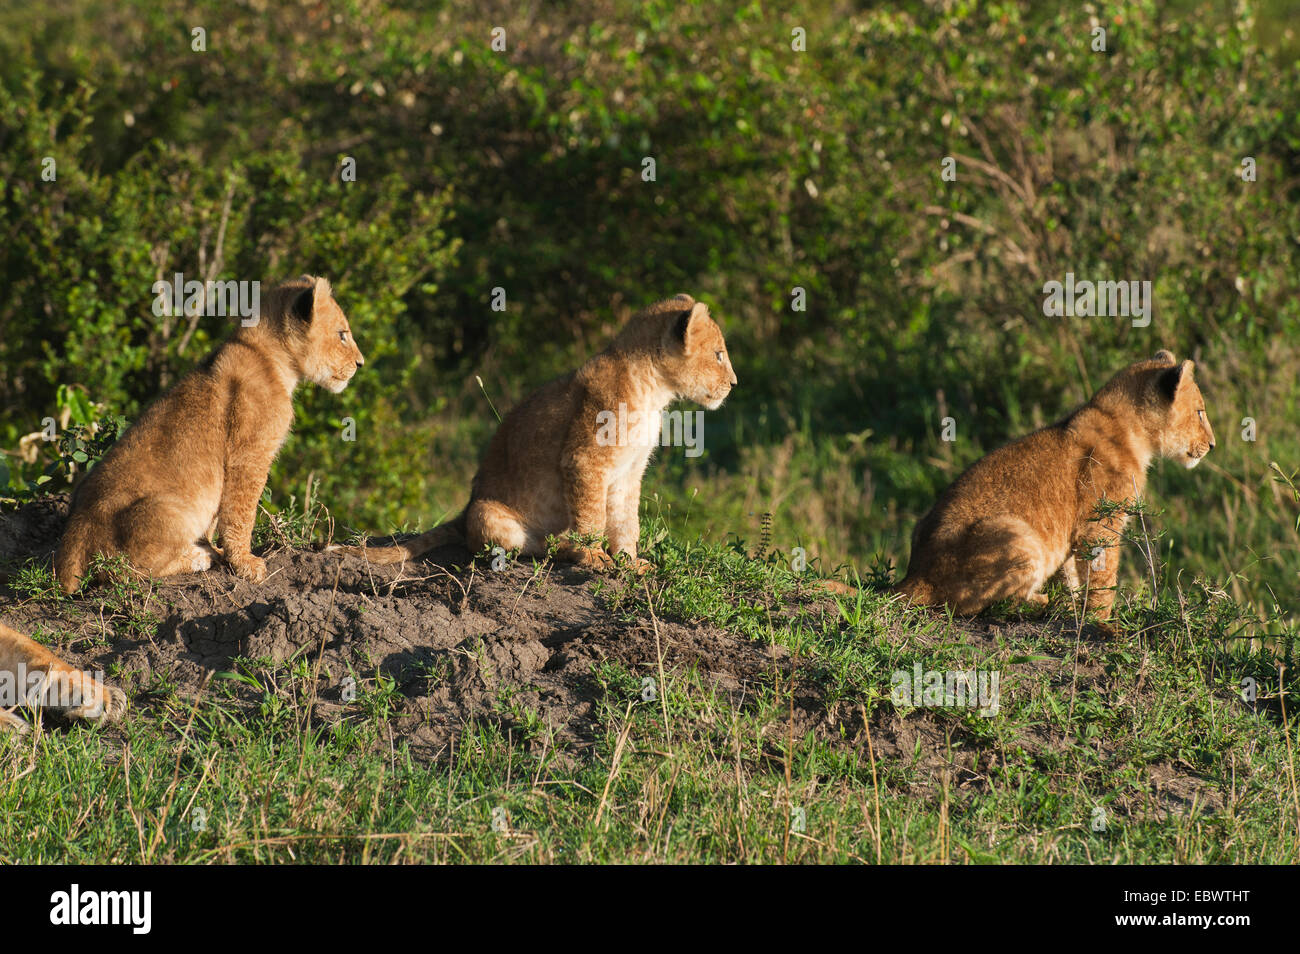 Three lion cubs (Panthera leo) sitting on grass in the early morning light, Massai Mara, Serengeti, Rift Valley province, Kenya Stock Photo